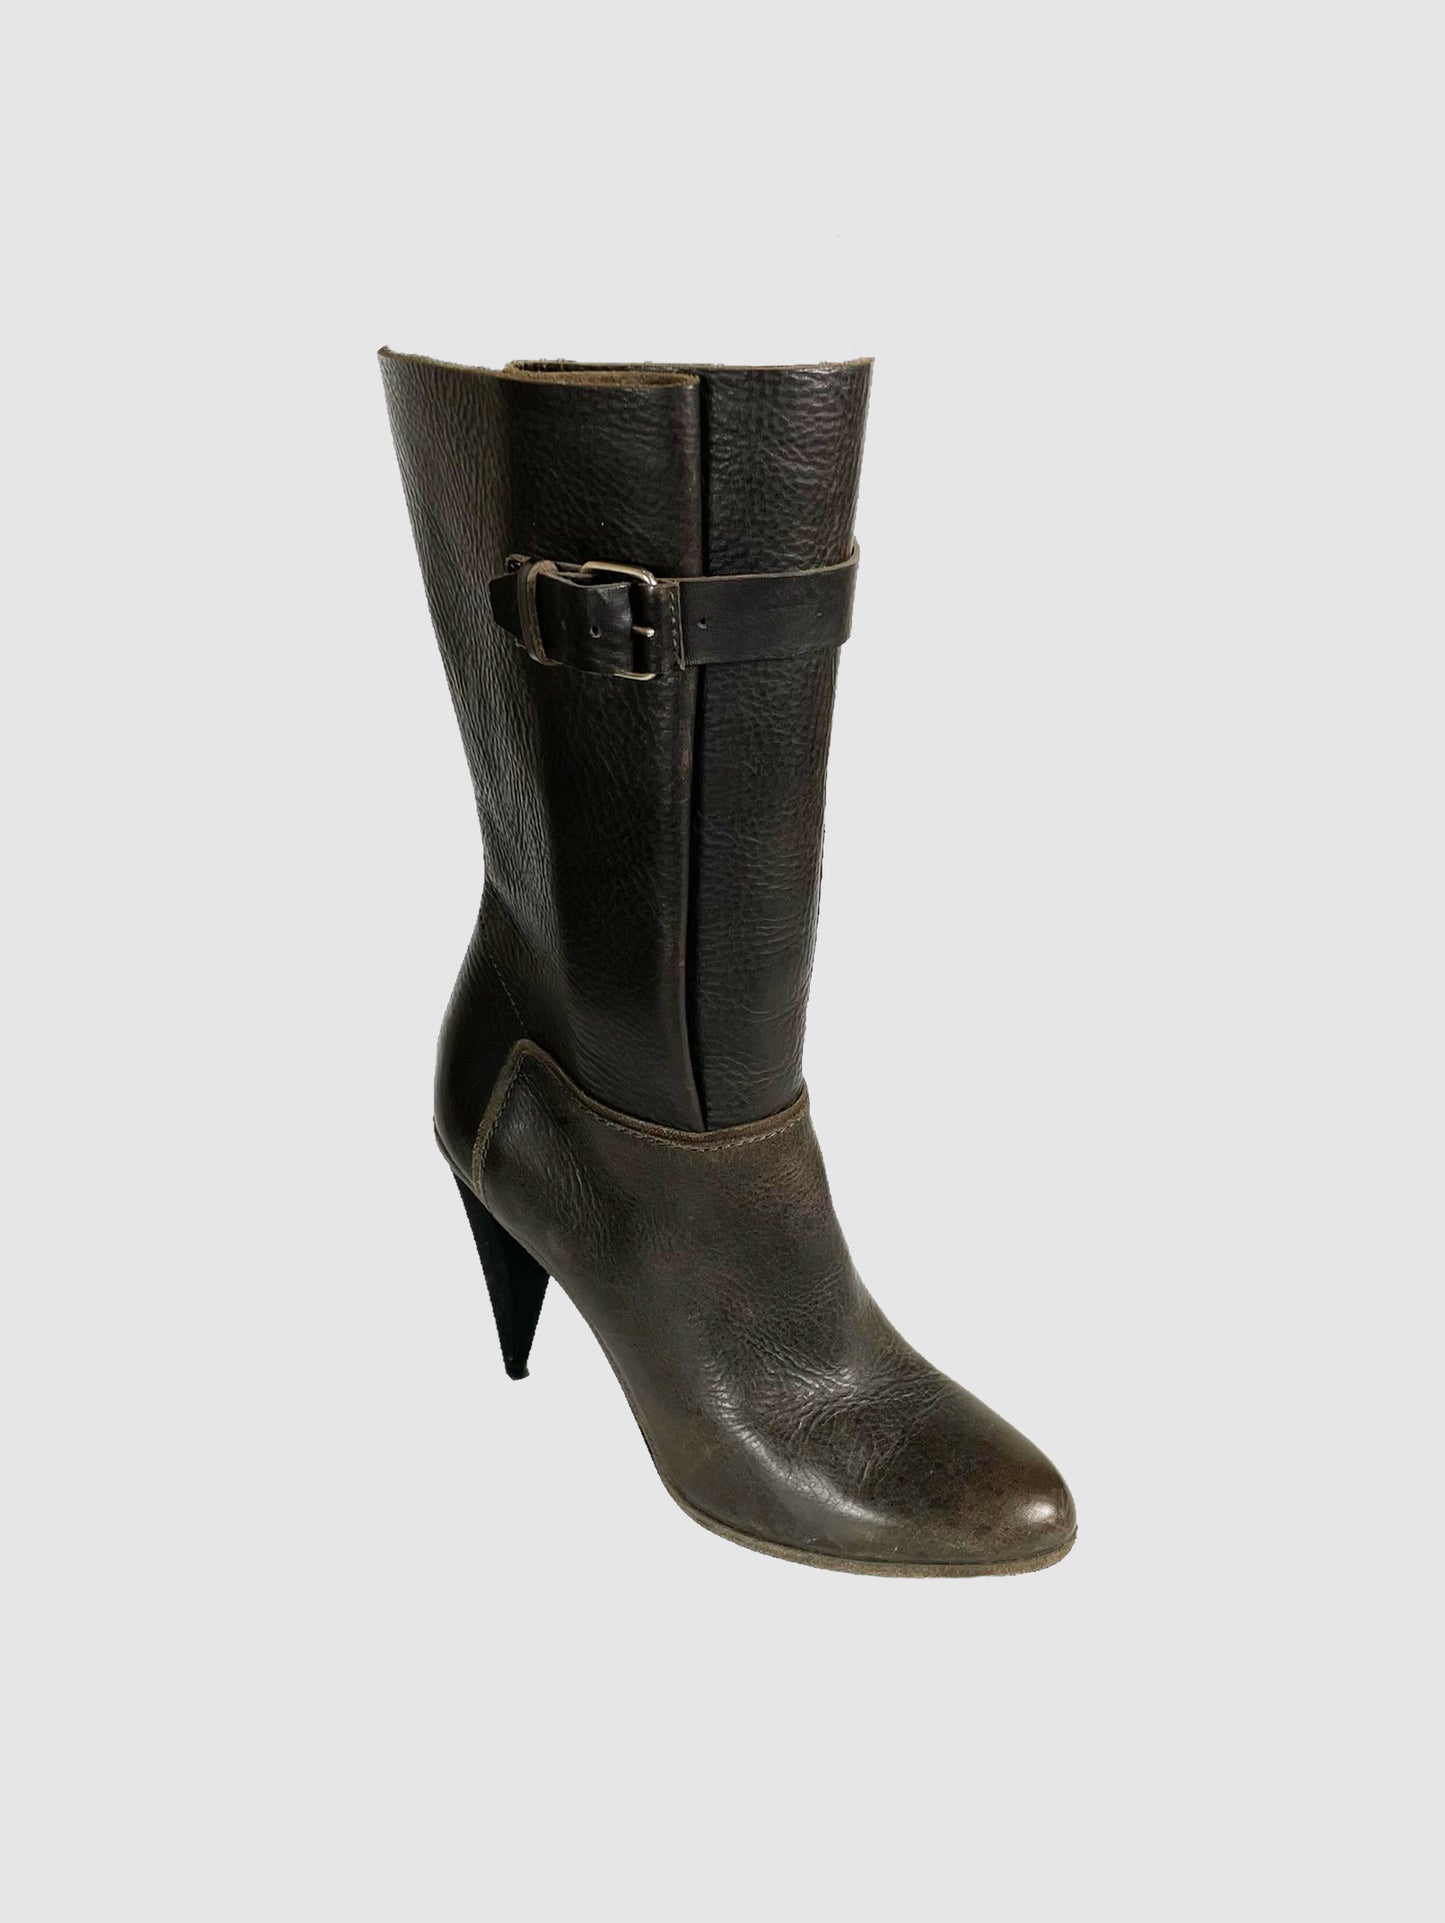 Balenciaga Tall Heeled Boots - Size 36.5